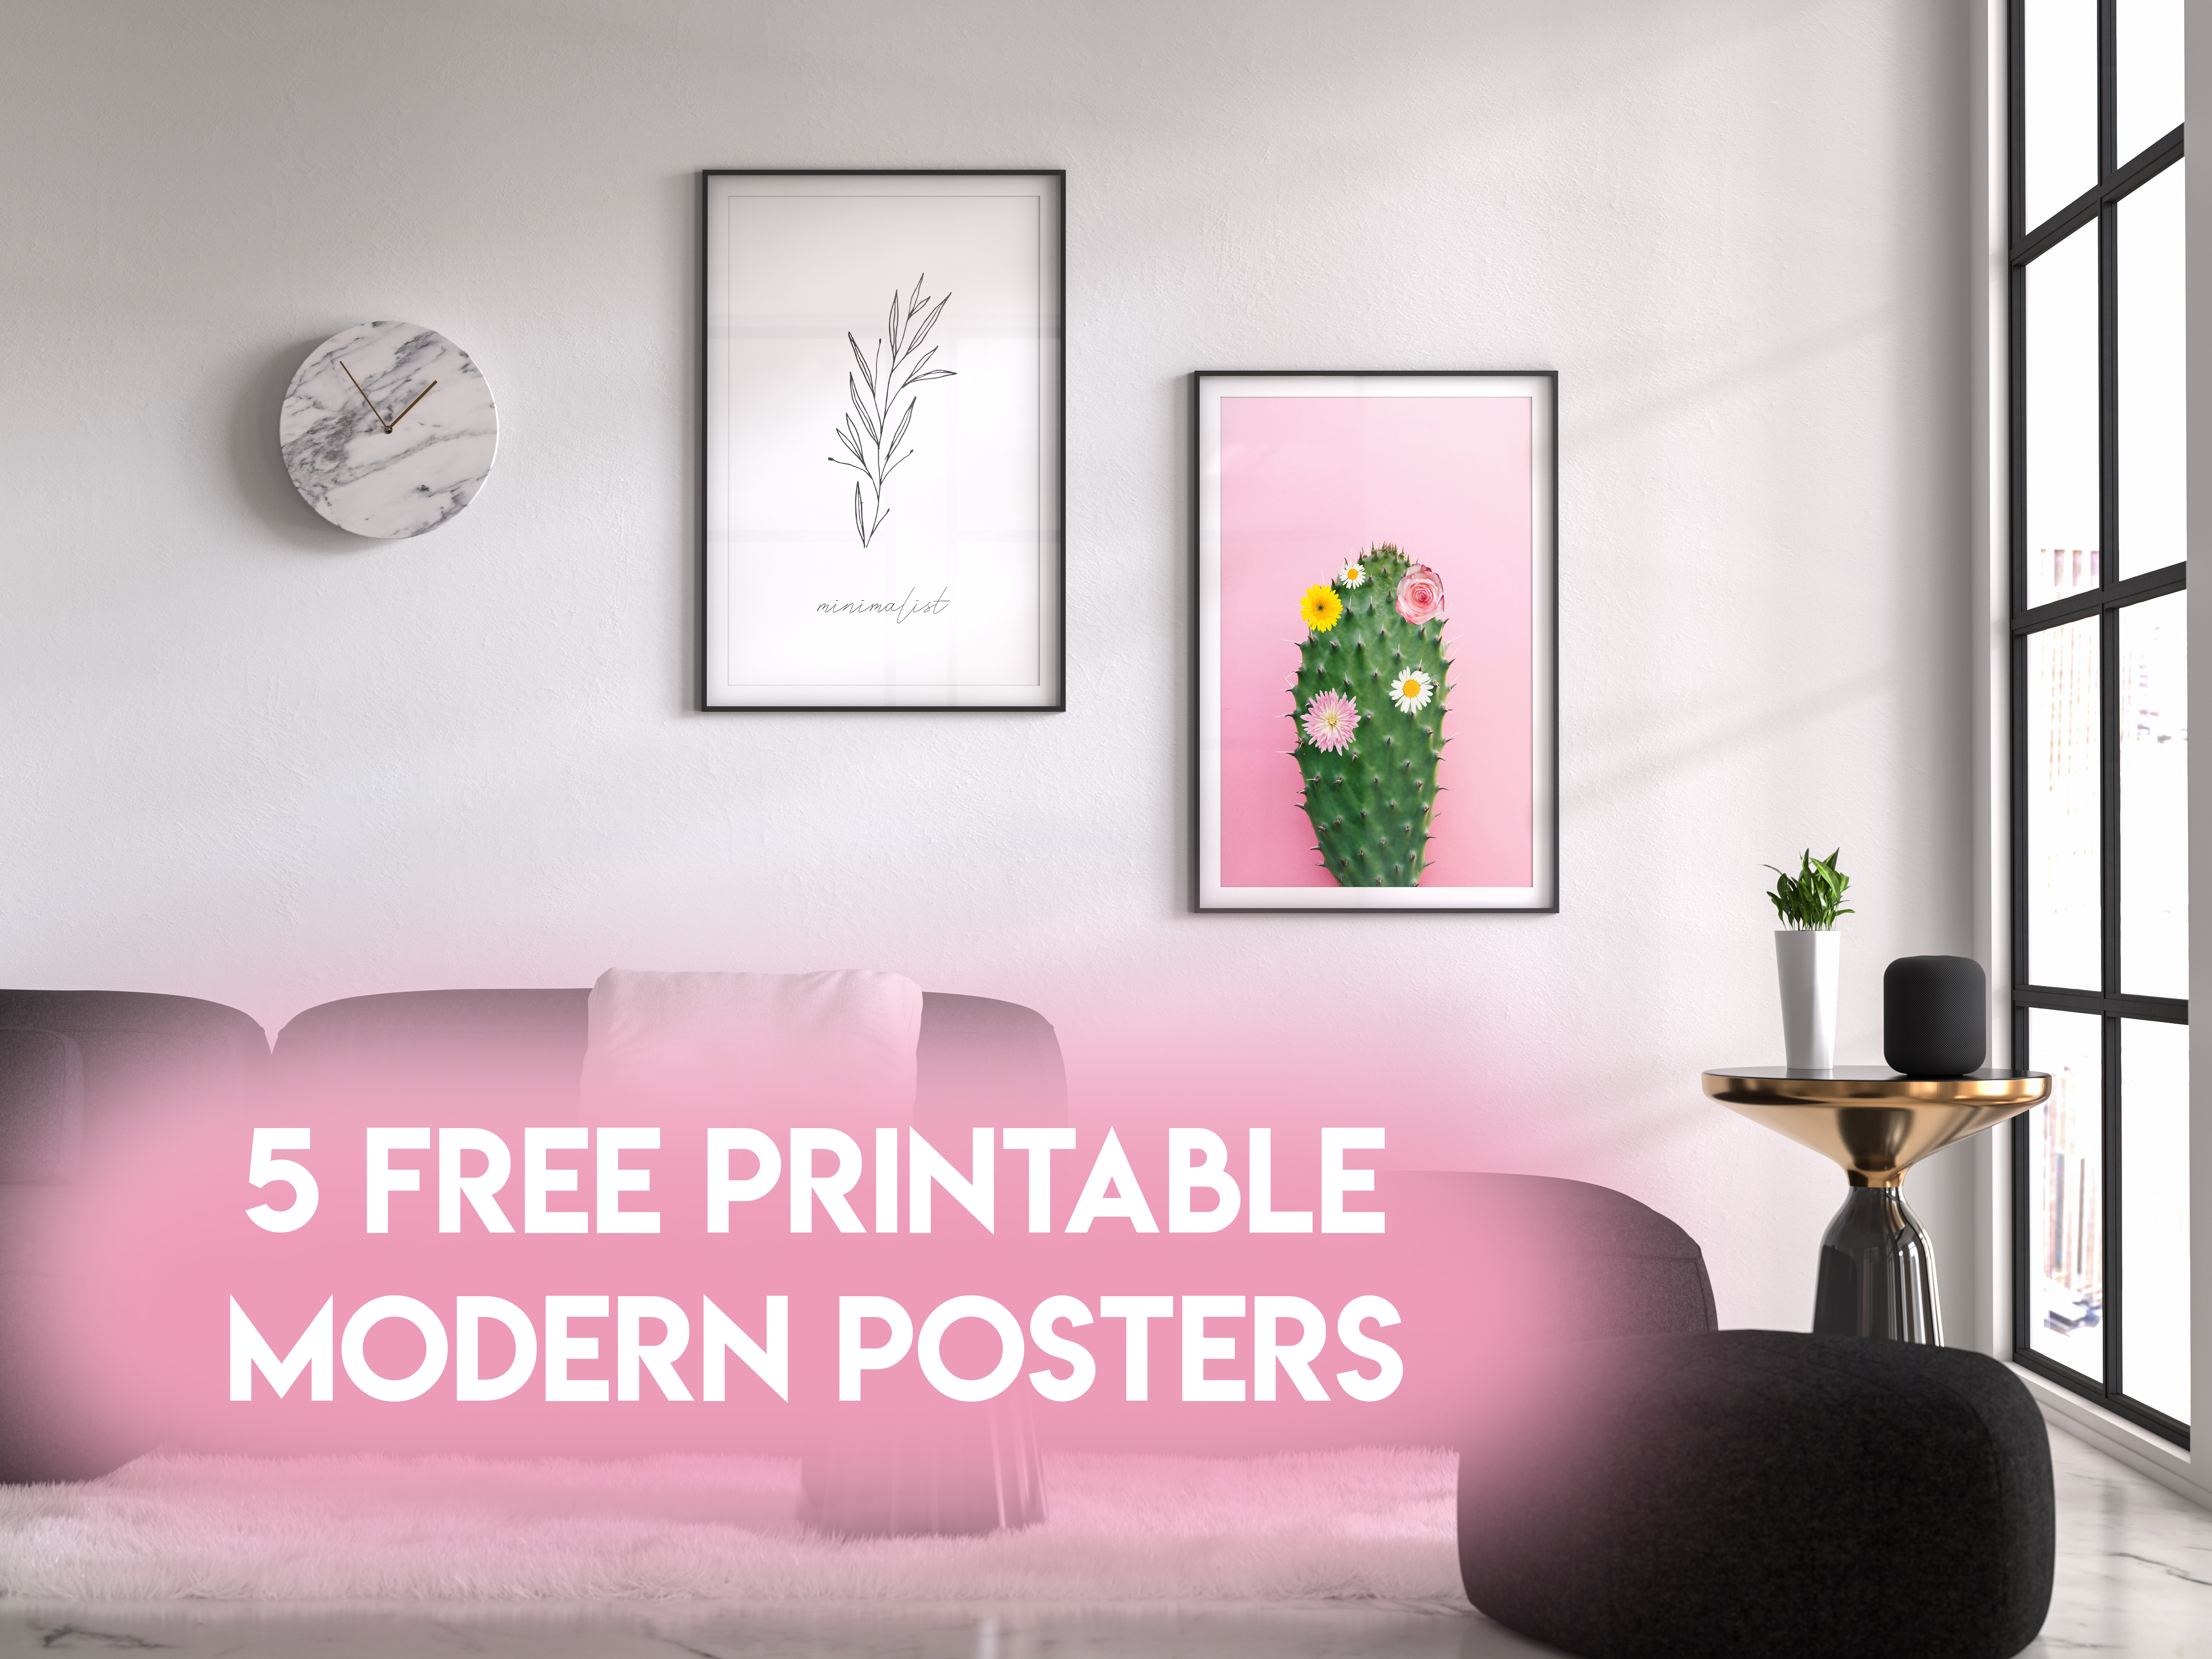 5 free printable posters – modern scandinavian style decor